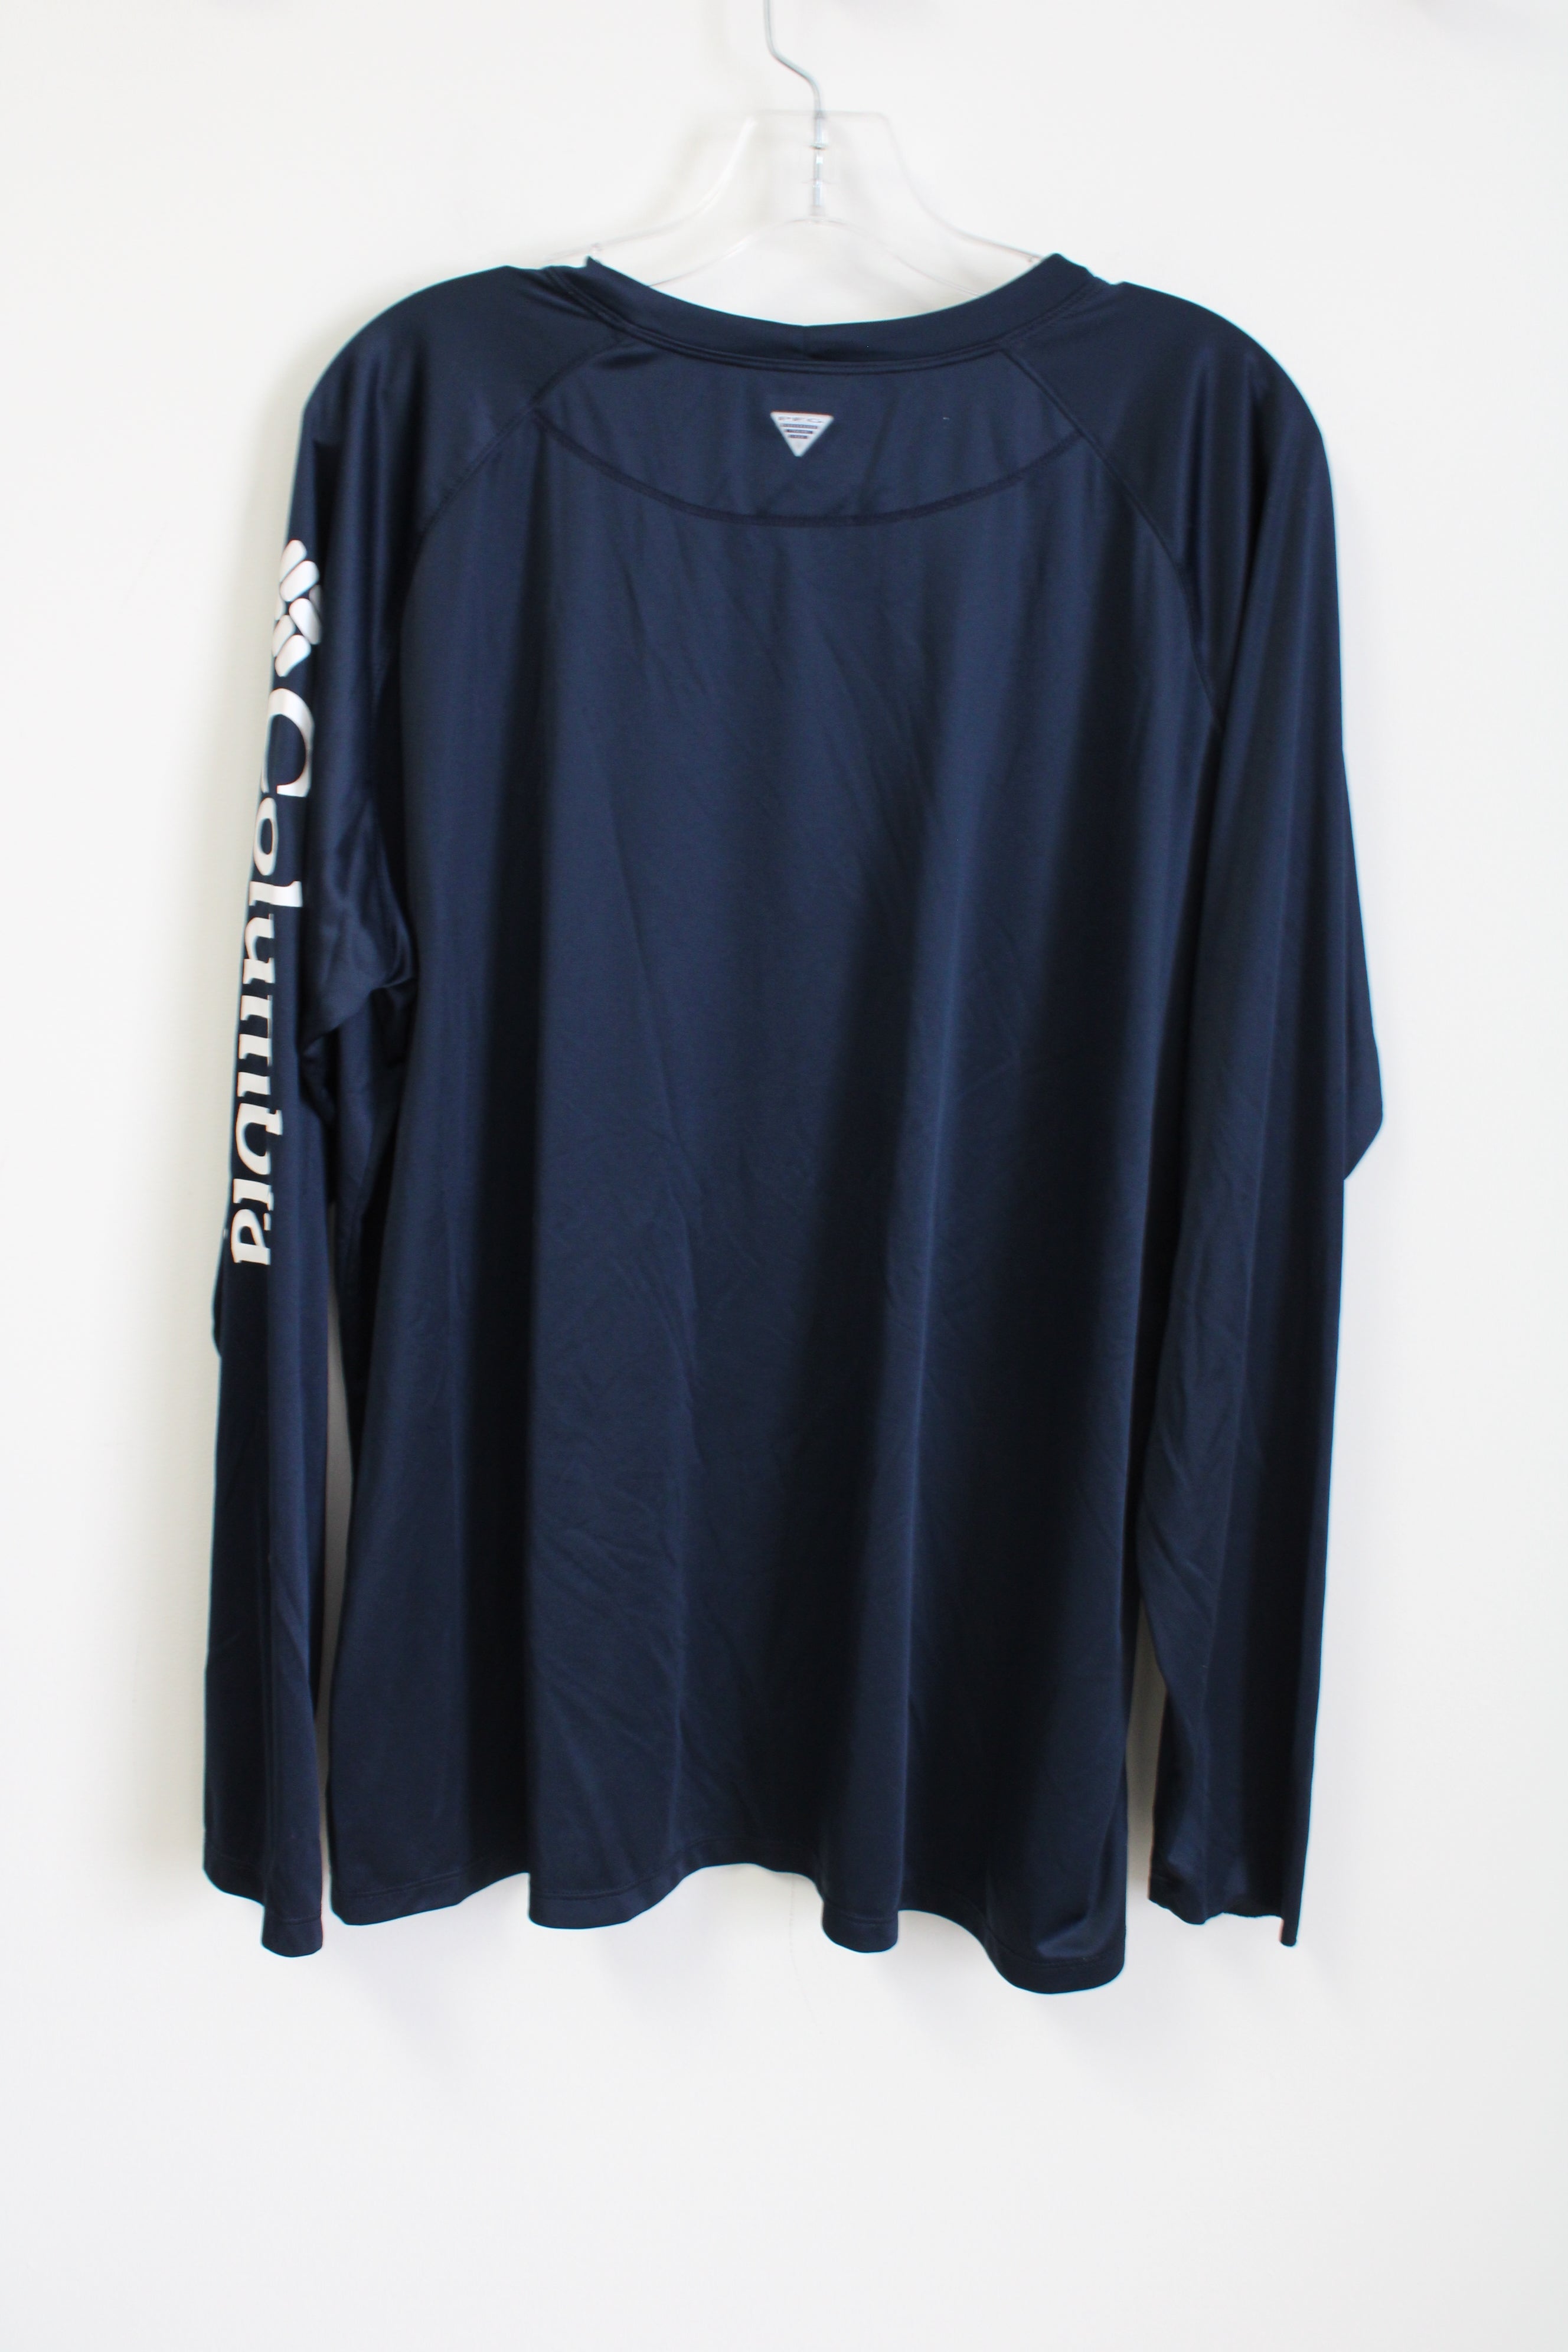 Columbia PFG Omni-Shade Navy Blue Logo Sleeve Shirt | 3X